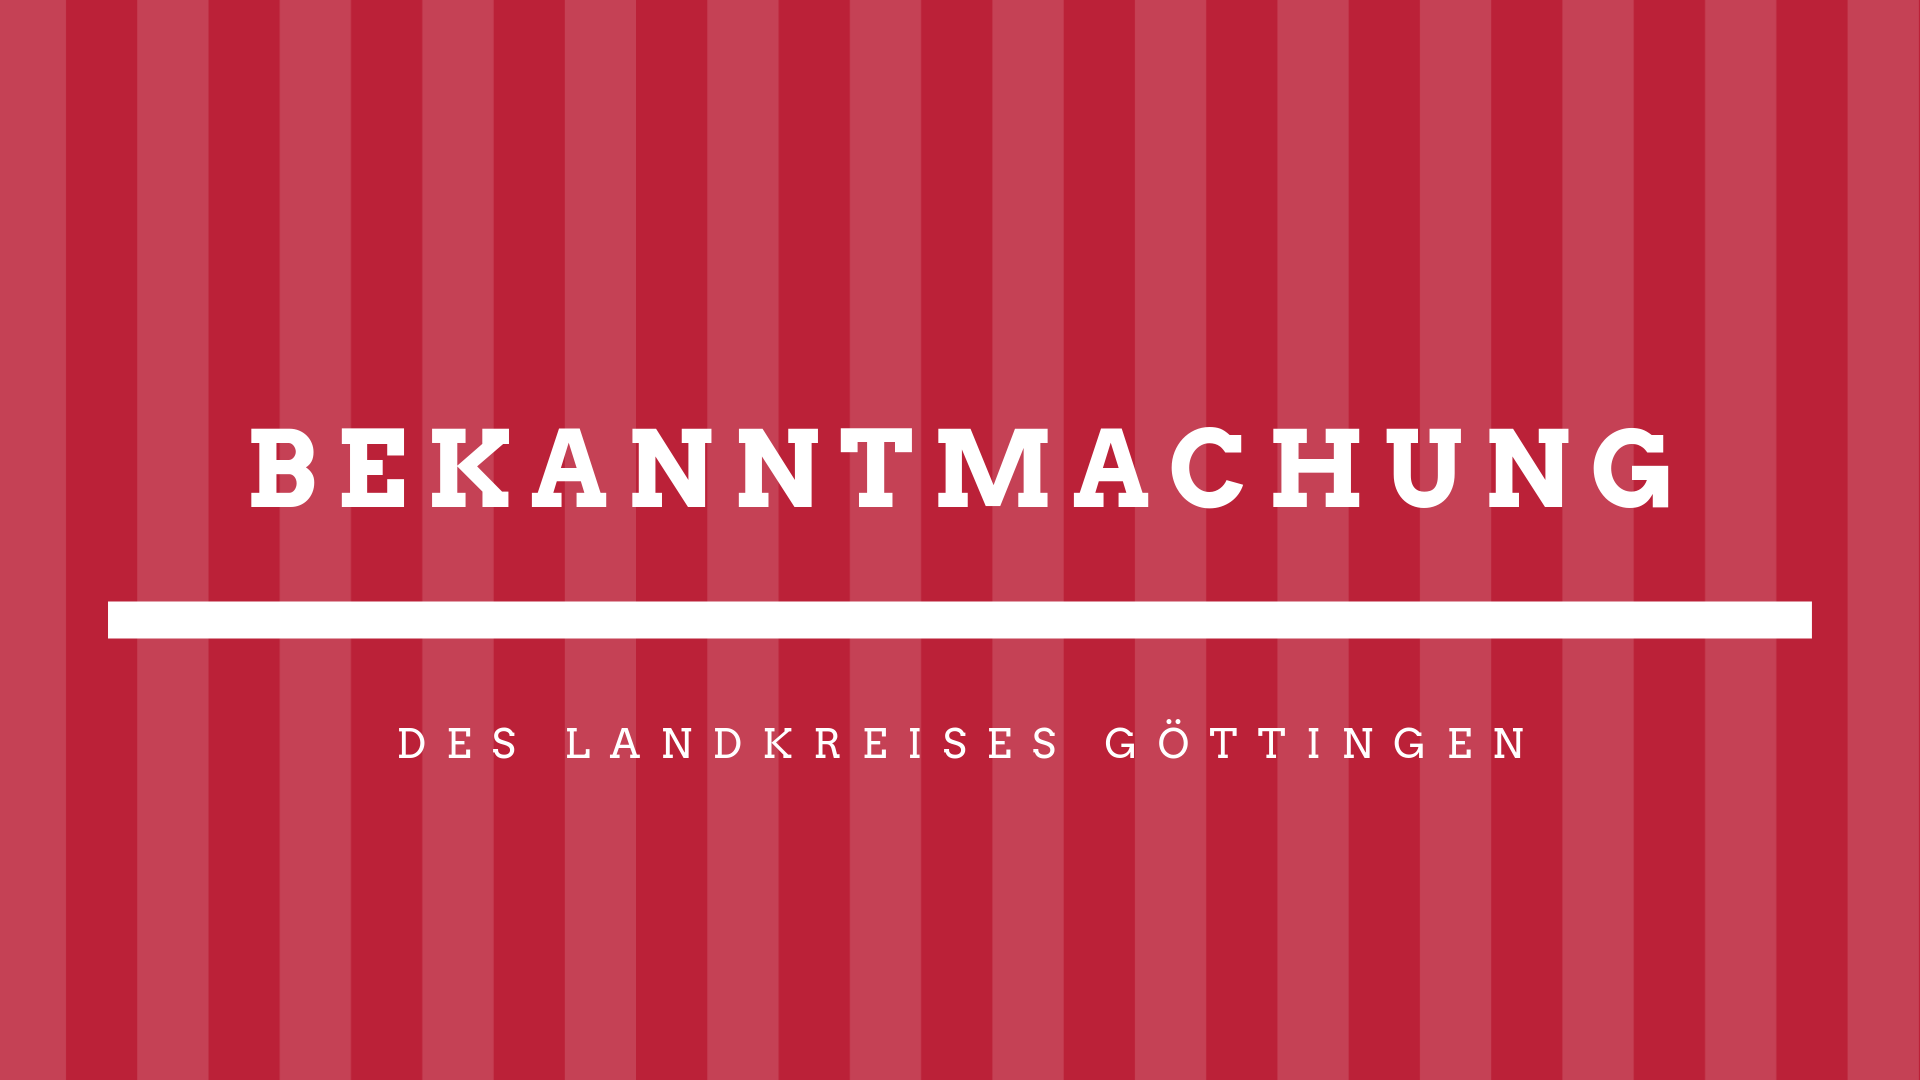 Bekanntmachung des Landkreises Göttingen